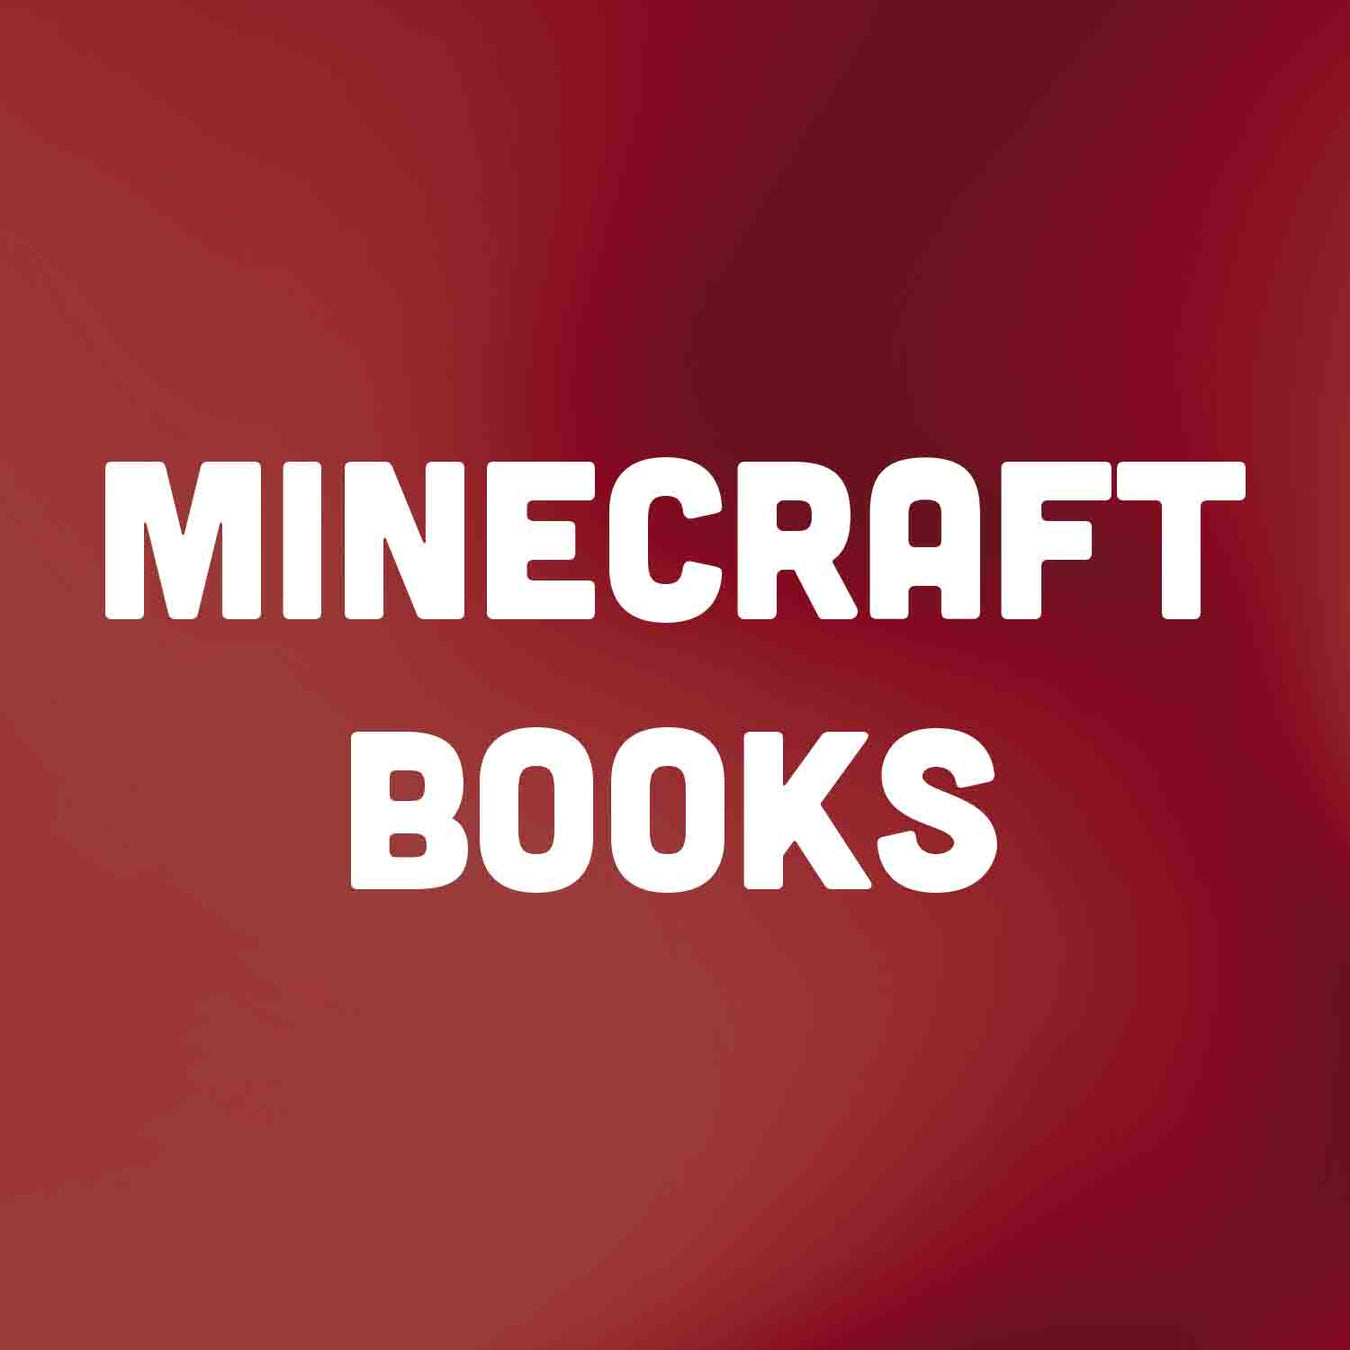 Minecraft: Hostile Mobs Paper Craft Kit - Scholastic Shop